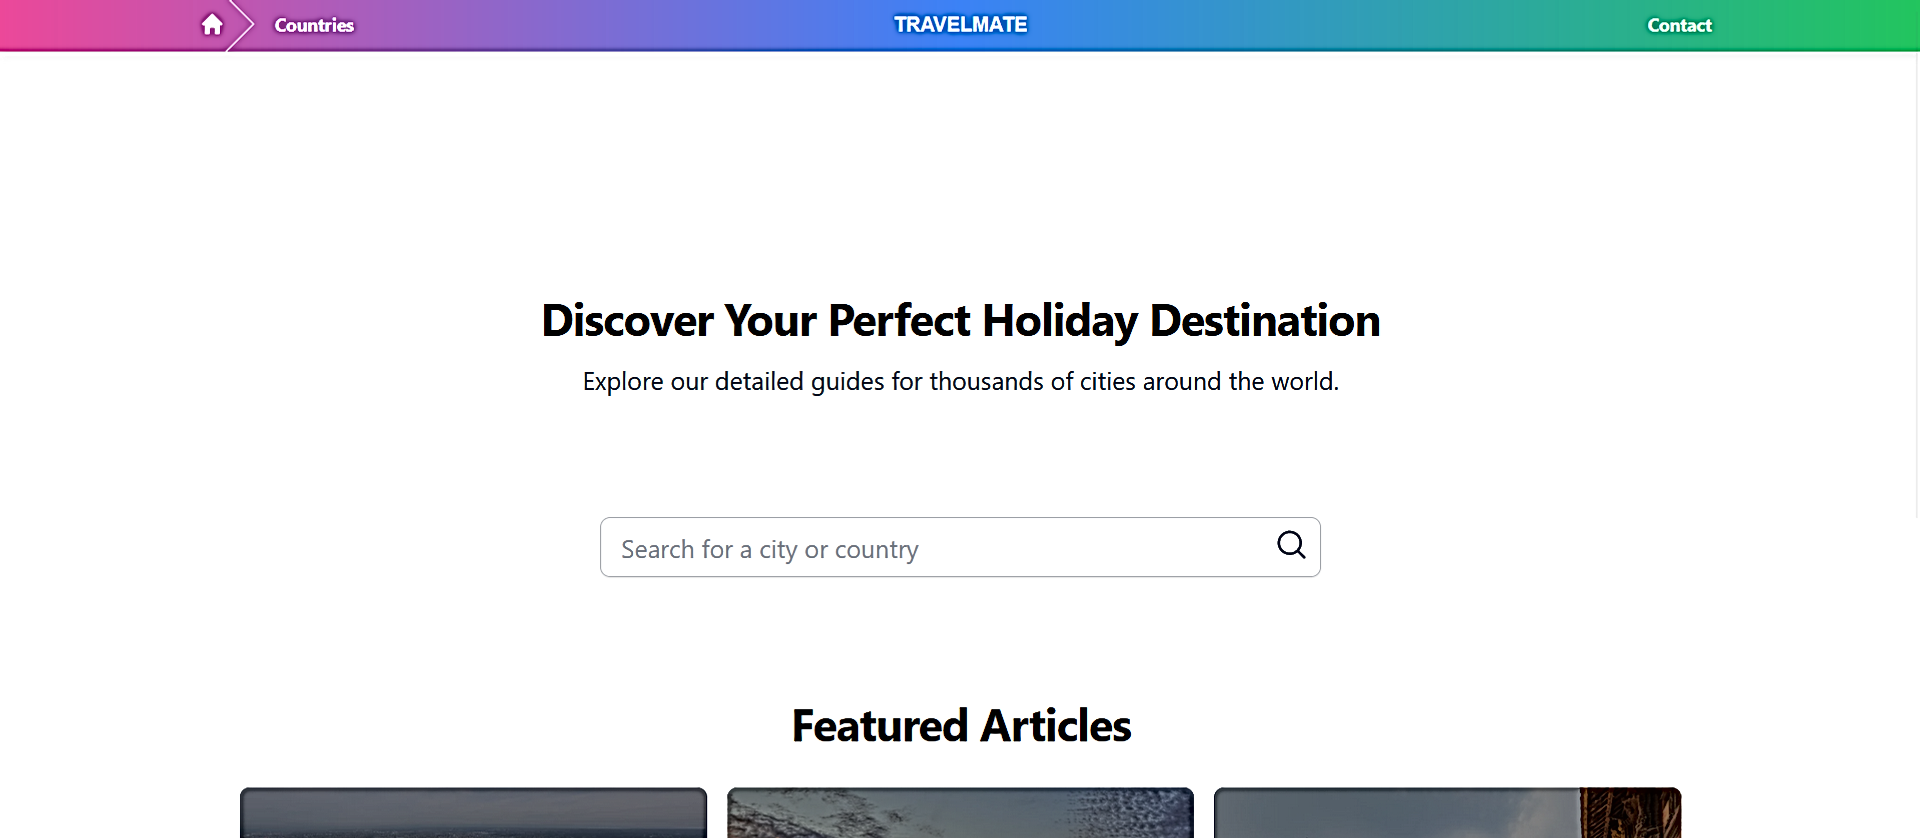 TravelMate featured